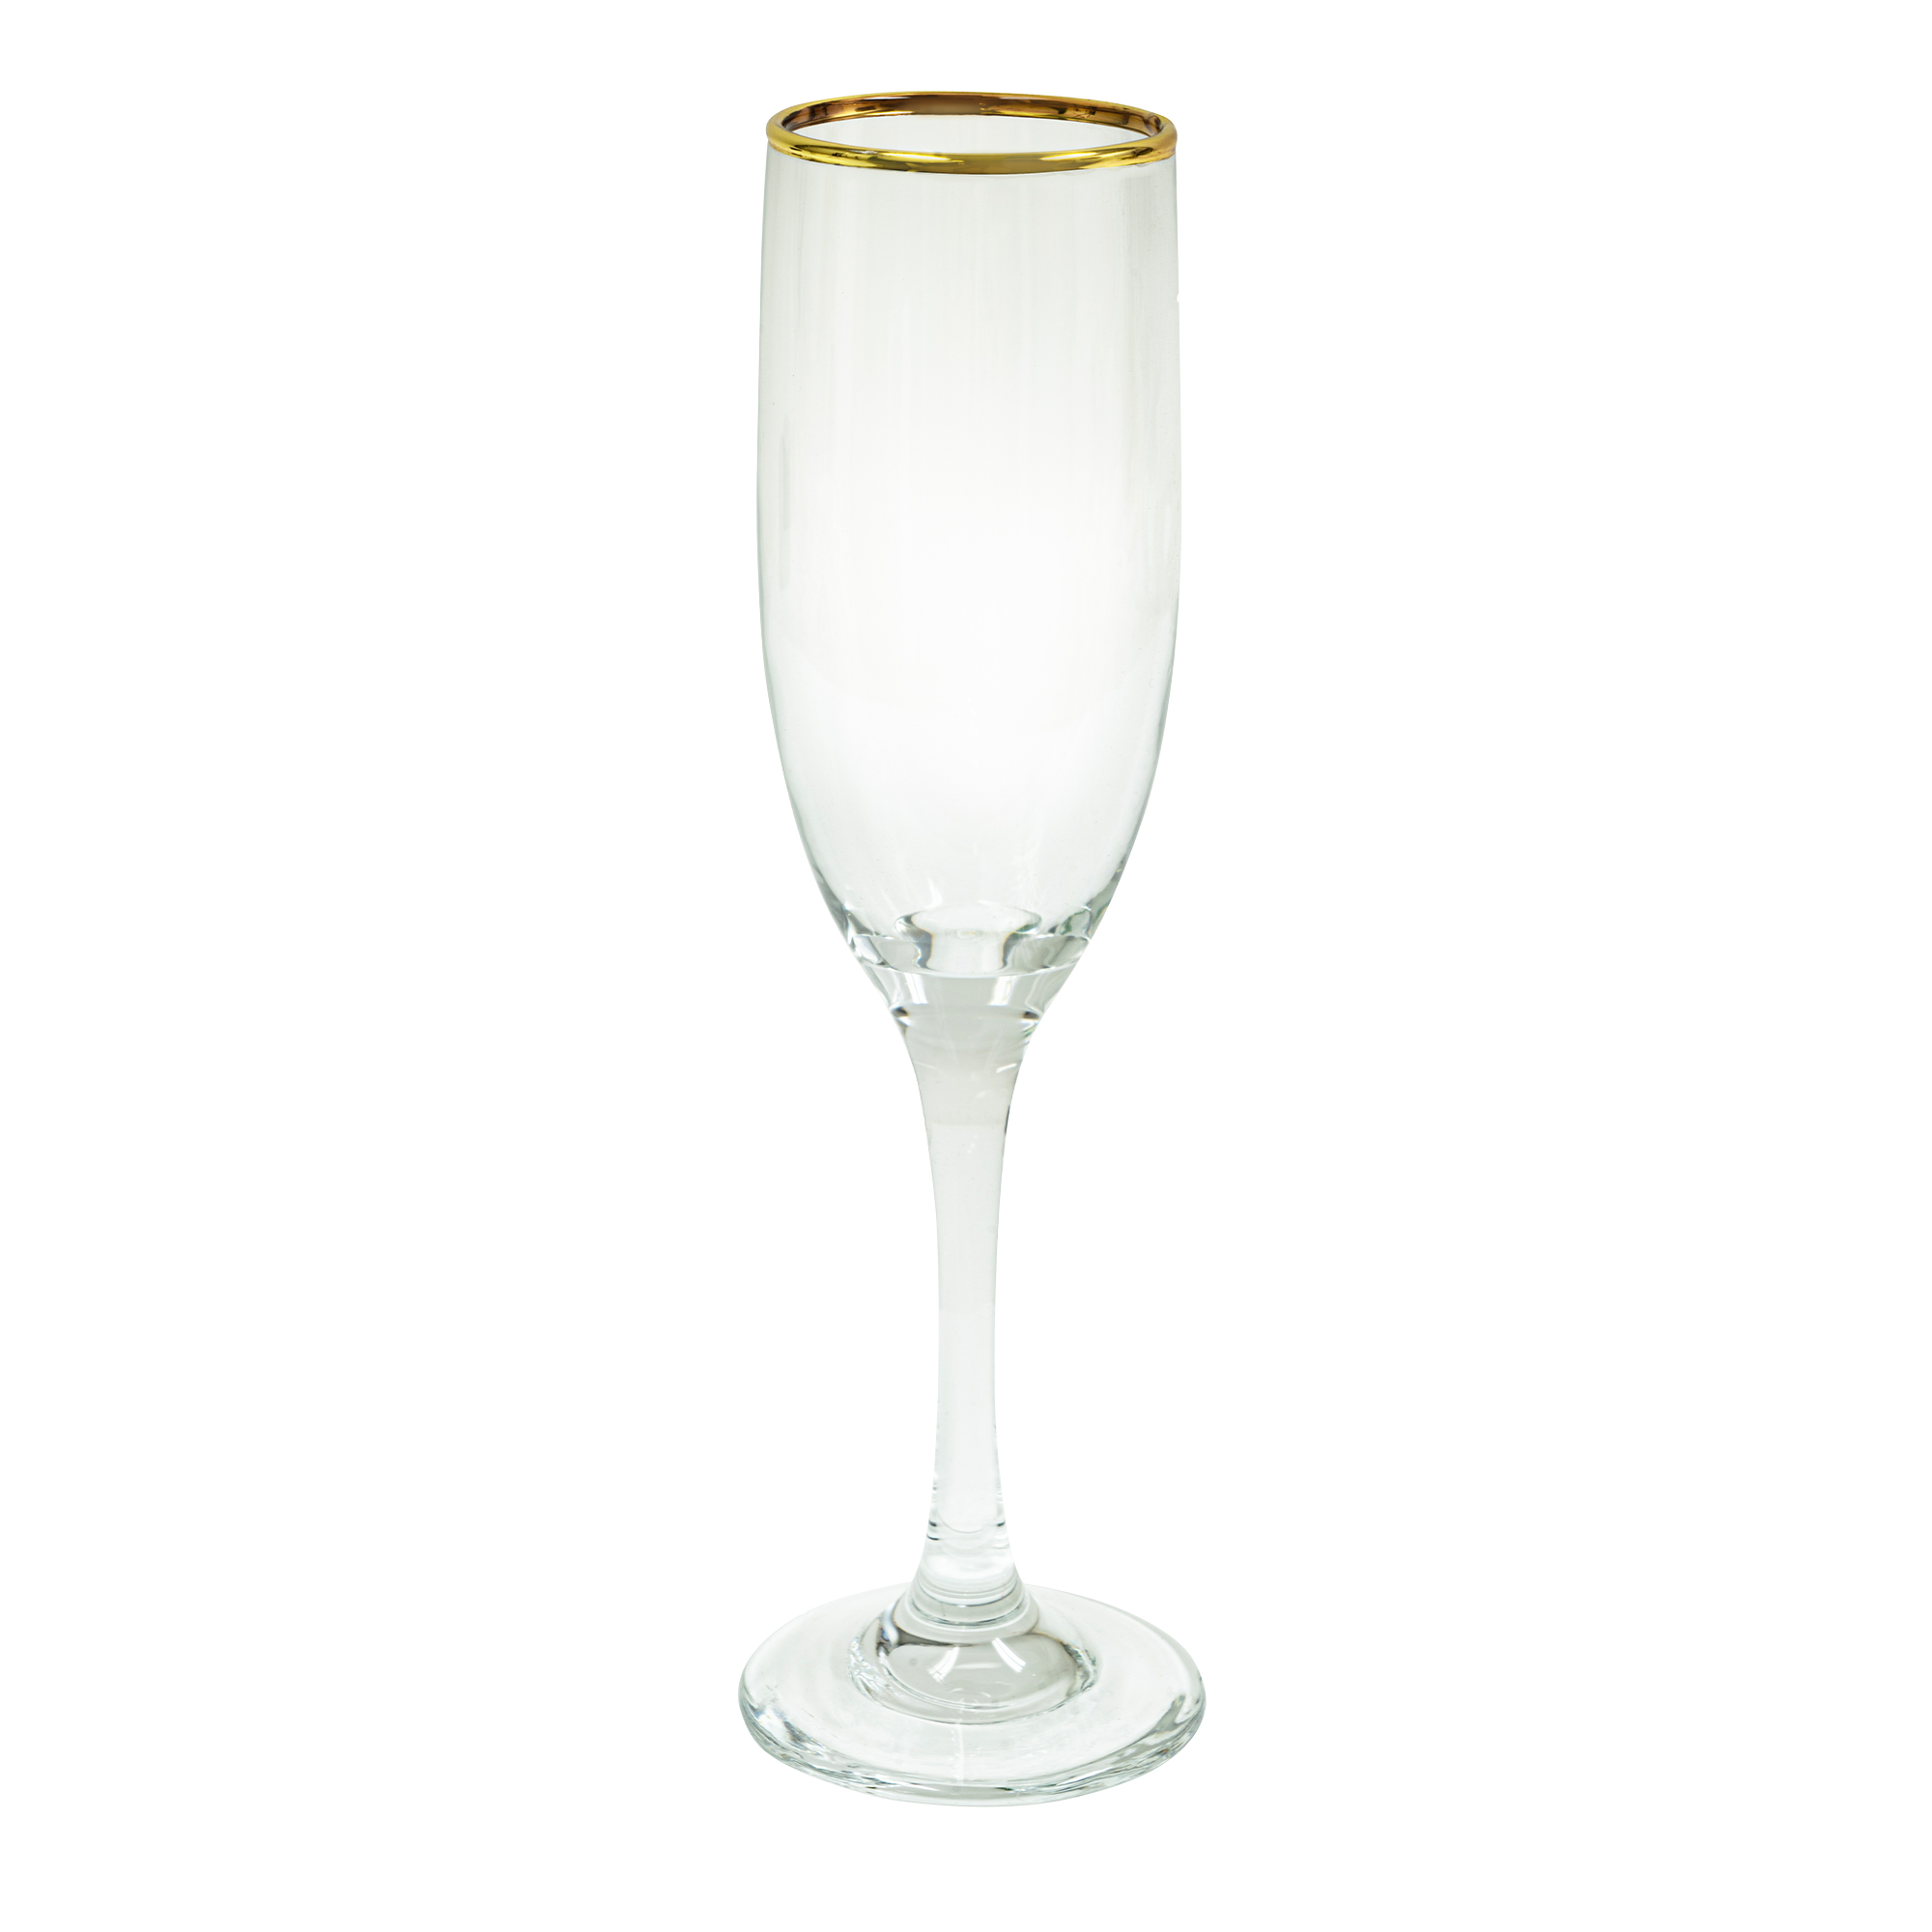 Glass Champagne Flutes Gold Rim- Set of 6pcs